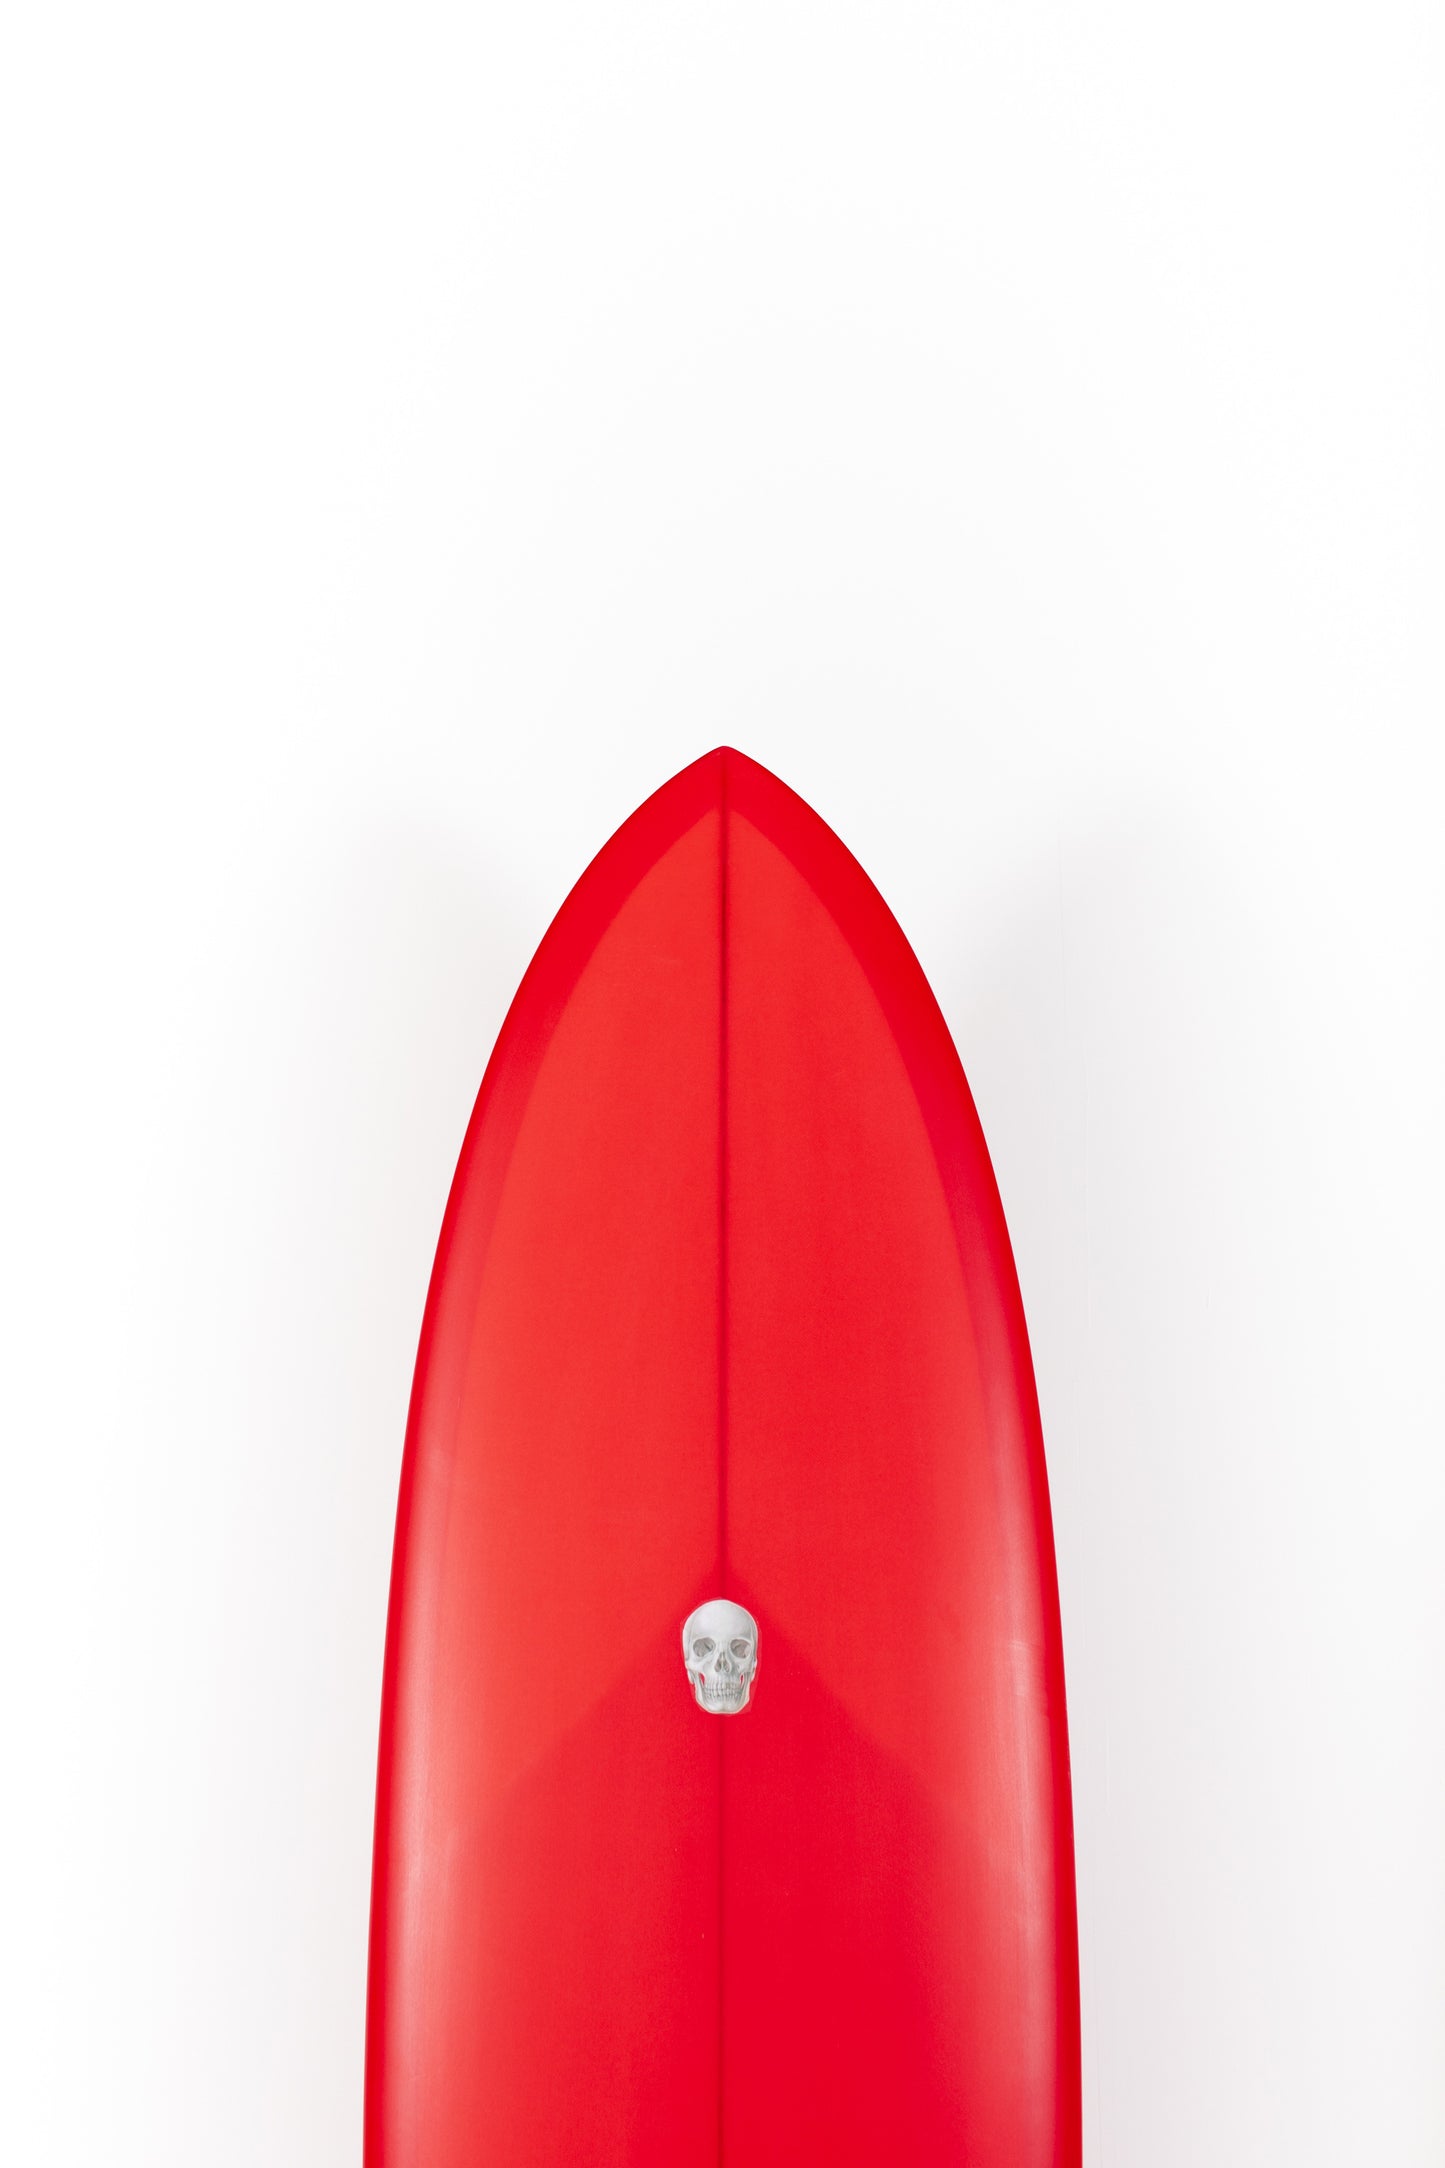 
                  
                    Pukas Surf shop - Christenson Surfboards - TWIN TRACKER - 7'2" x 21 1/4  x 2 7/8 - CX02890
                  
                